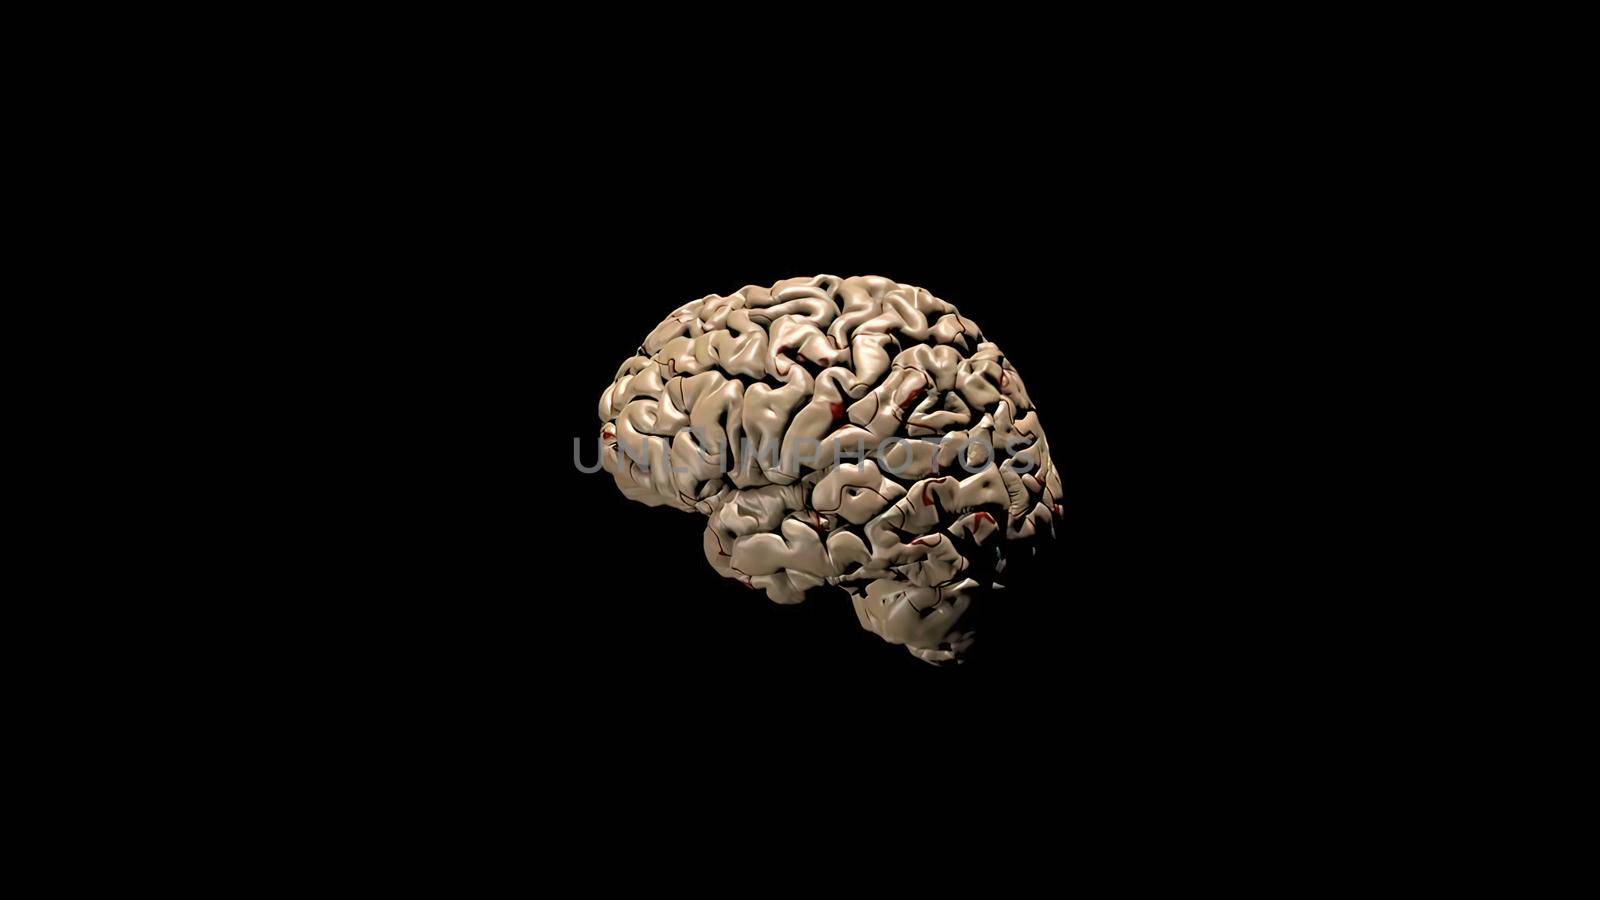 Medical 3D illustration of human brain .